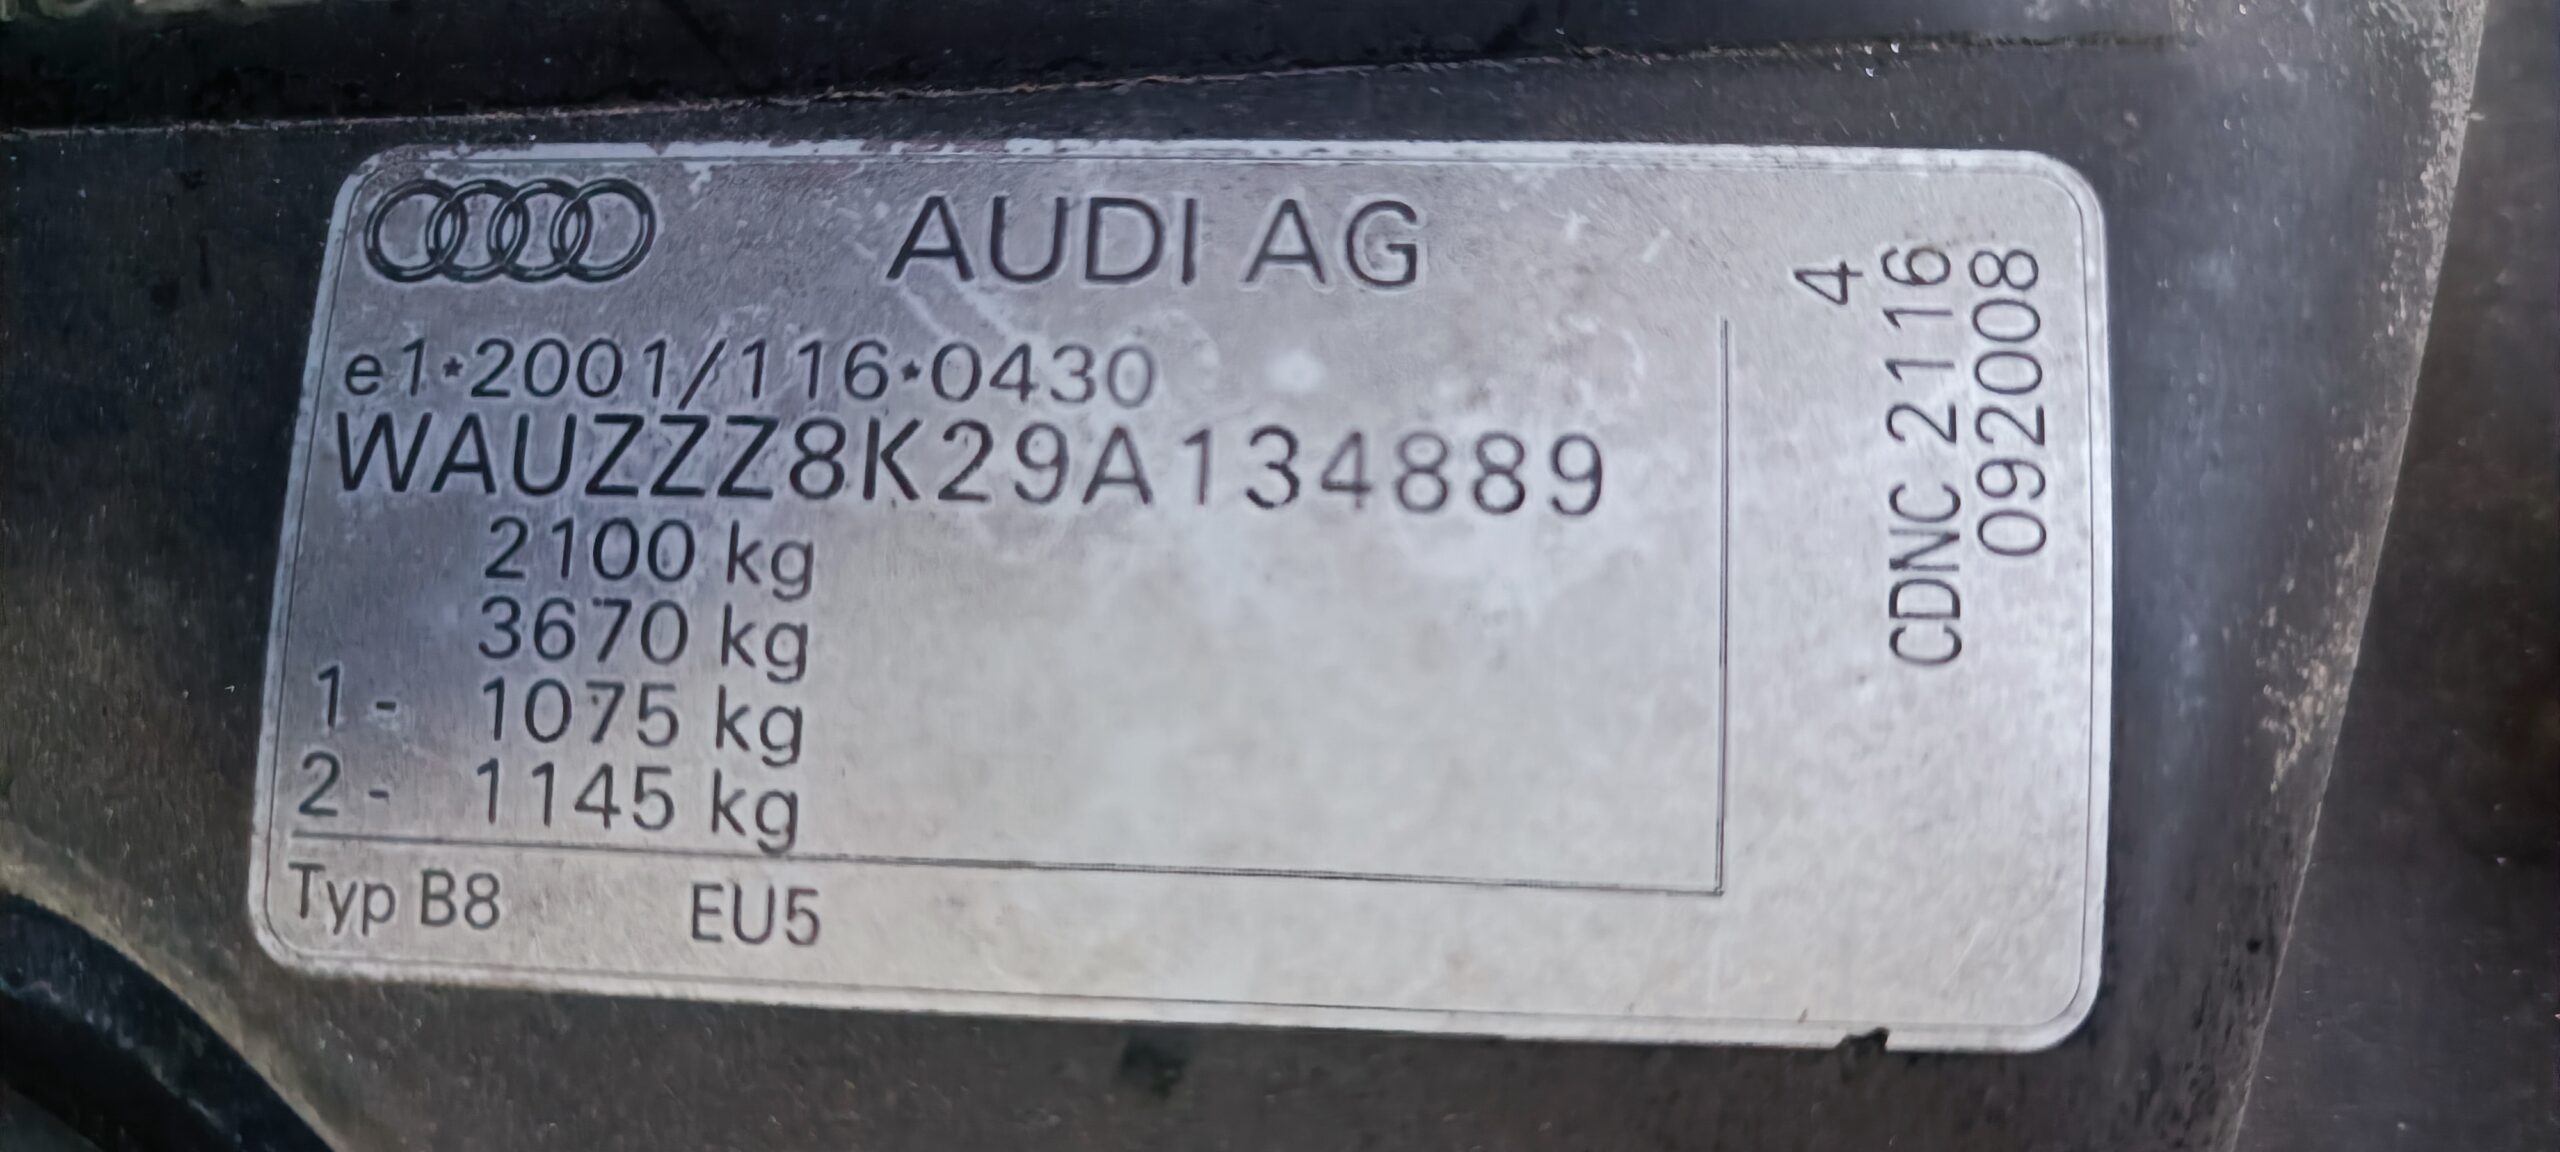 AUDI A4 S LINE, 2.0 TFSI, 211 CP, EURO 5